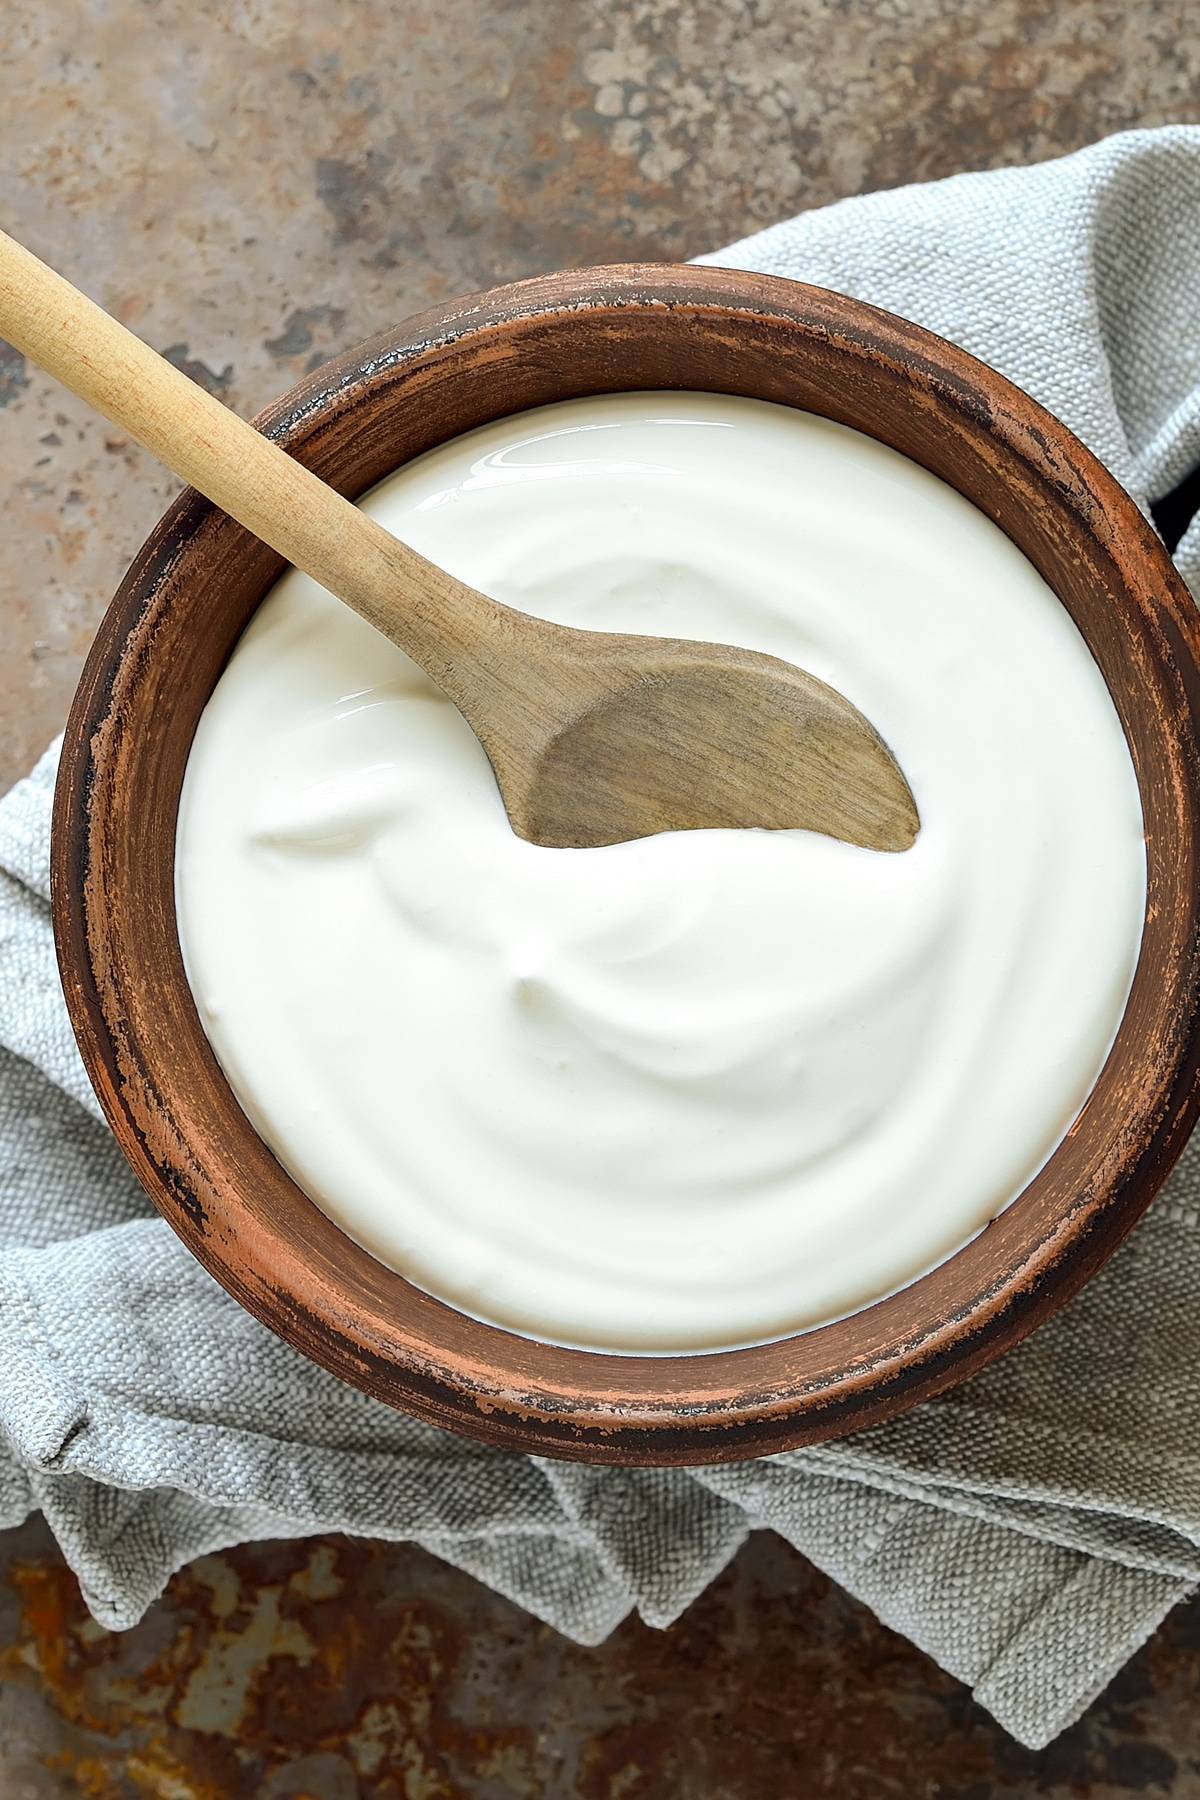 How To Make Yogurt